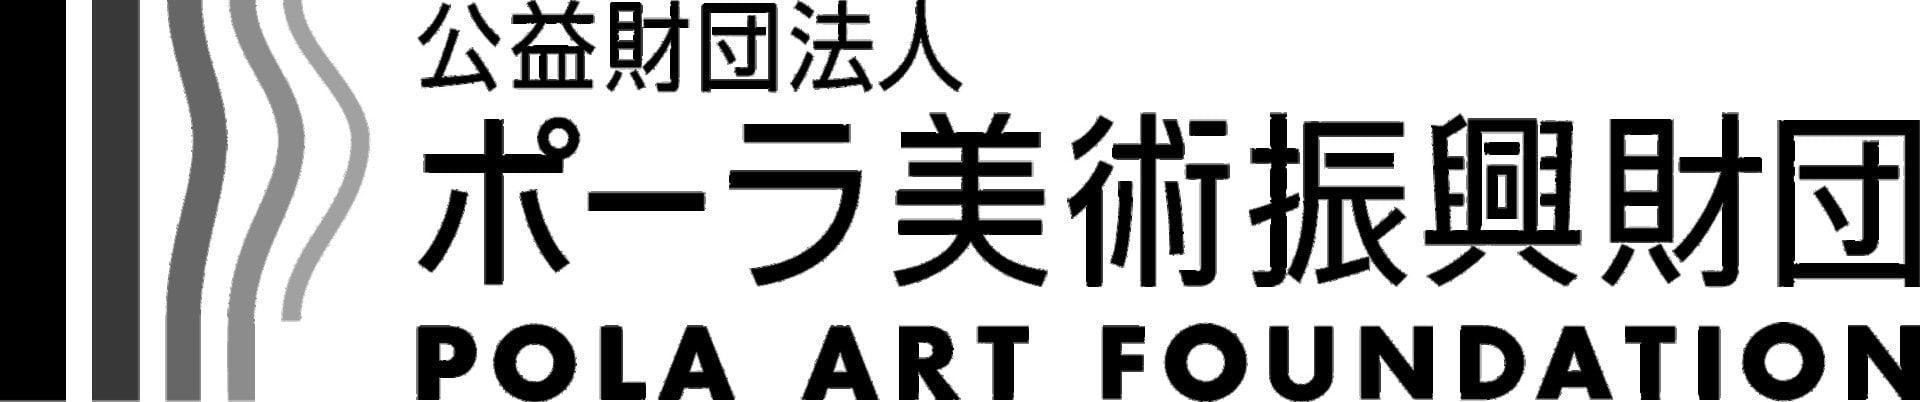 Logo_Pola Art Foundation